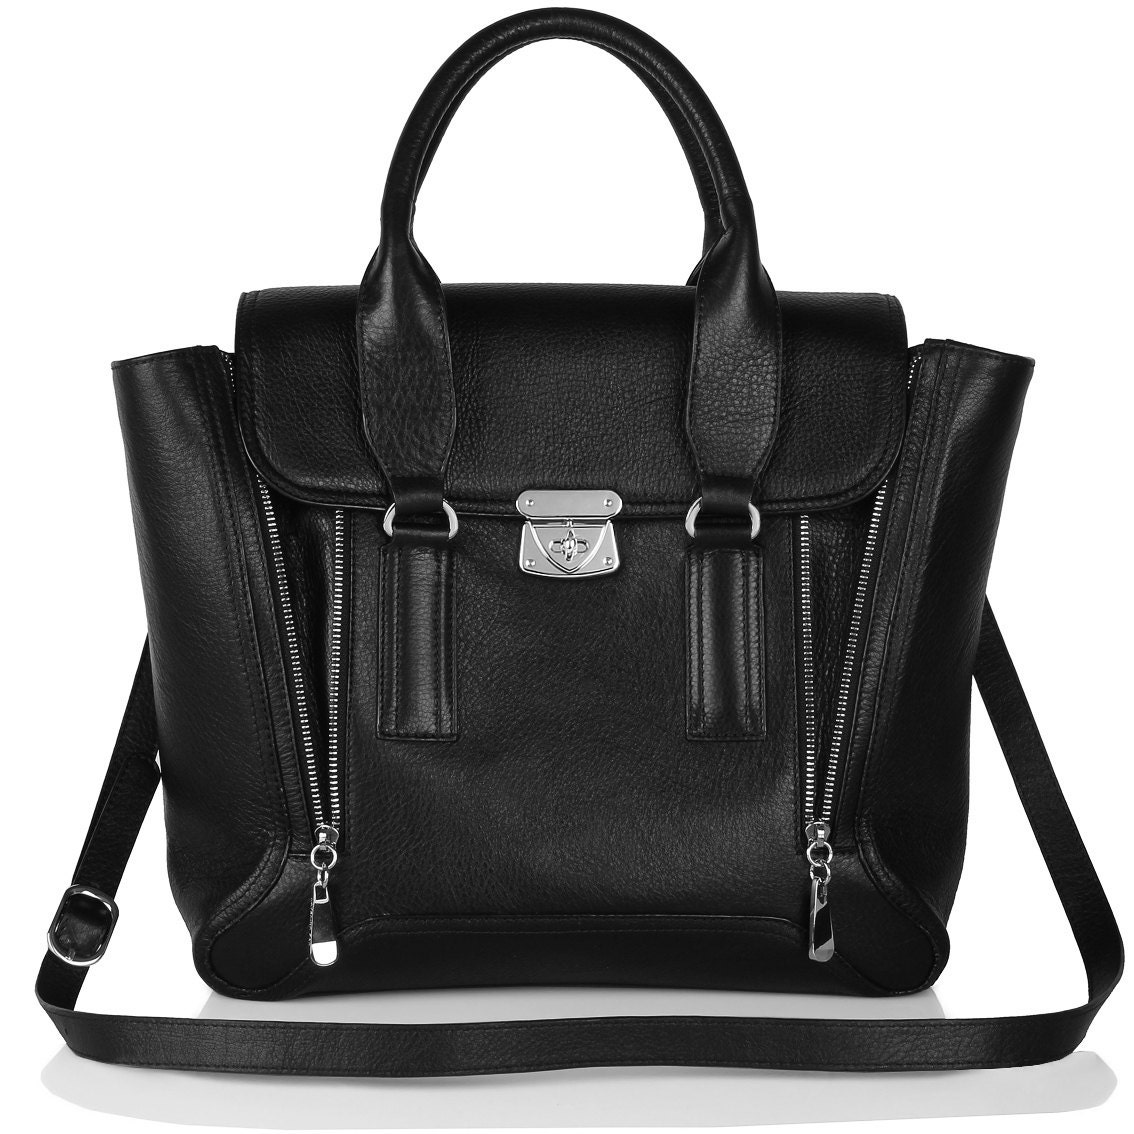 Black genuine leather handbag black genuine by KaterinaFoxBags